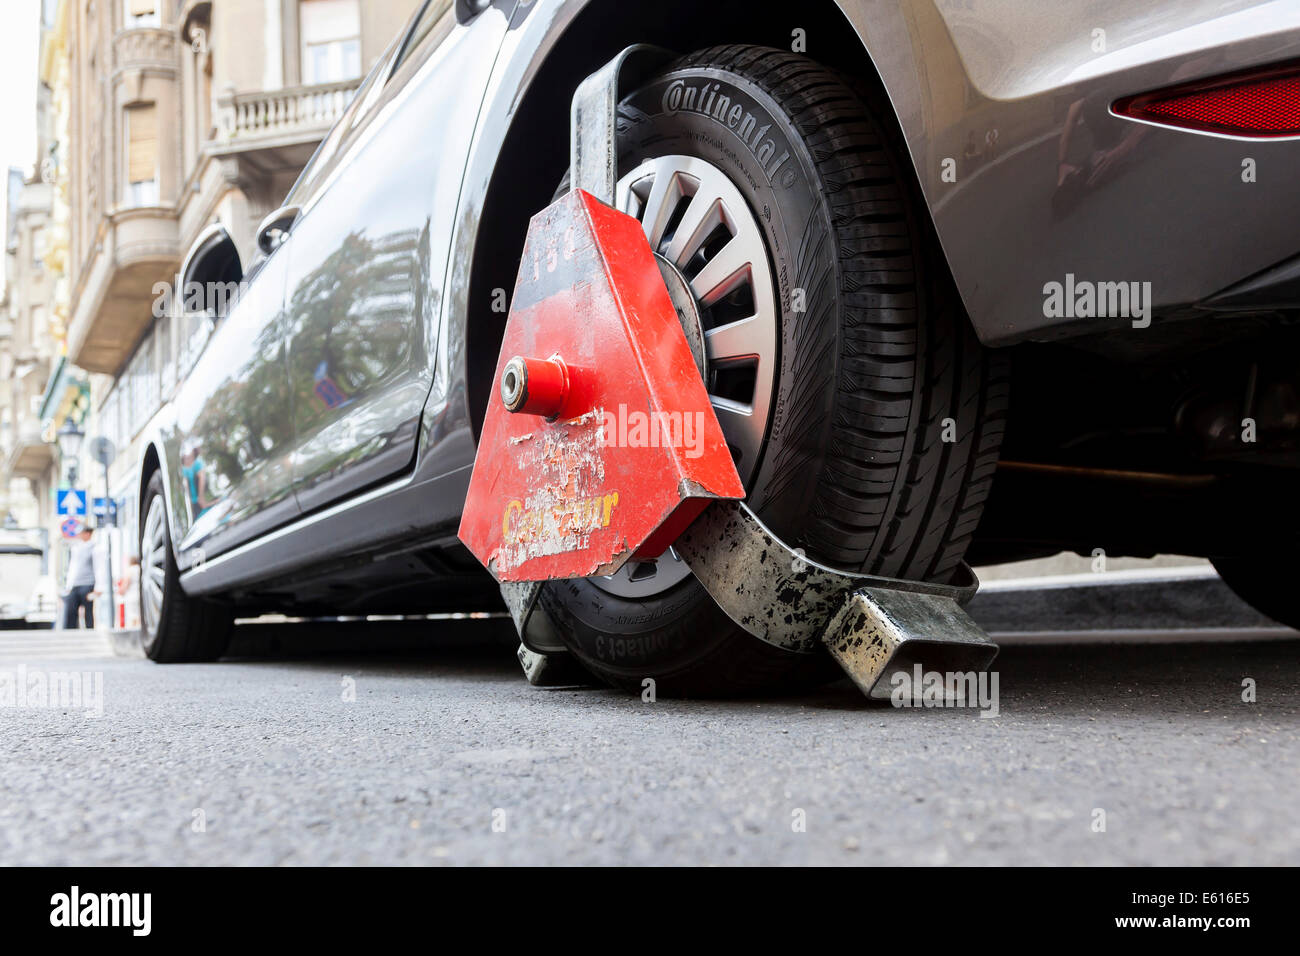 Wheel clamp on a vehicle, Budapest, Hungary Stock Photo